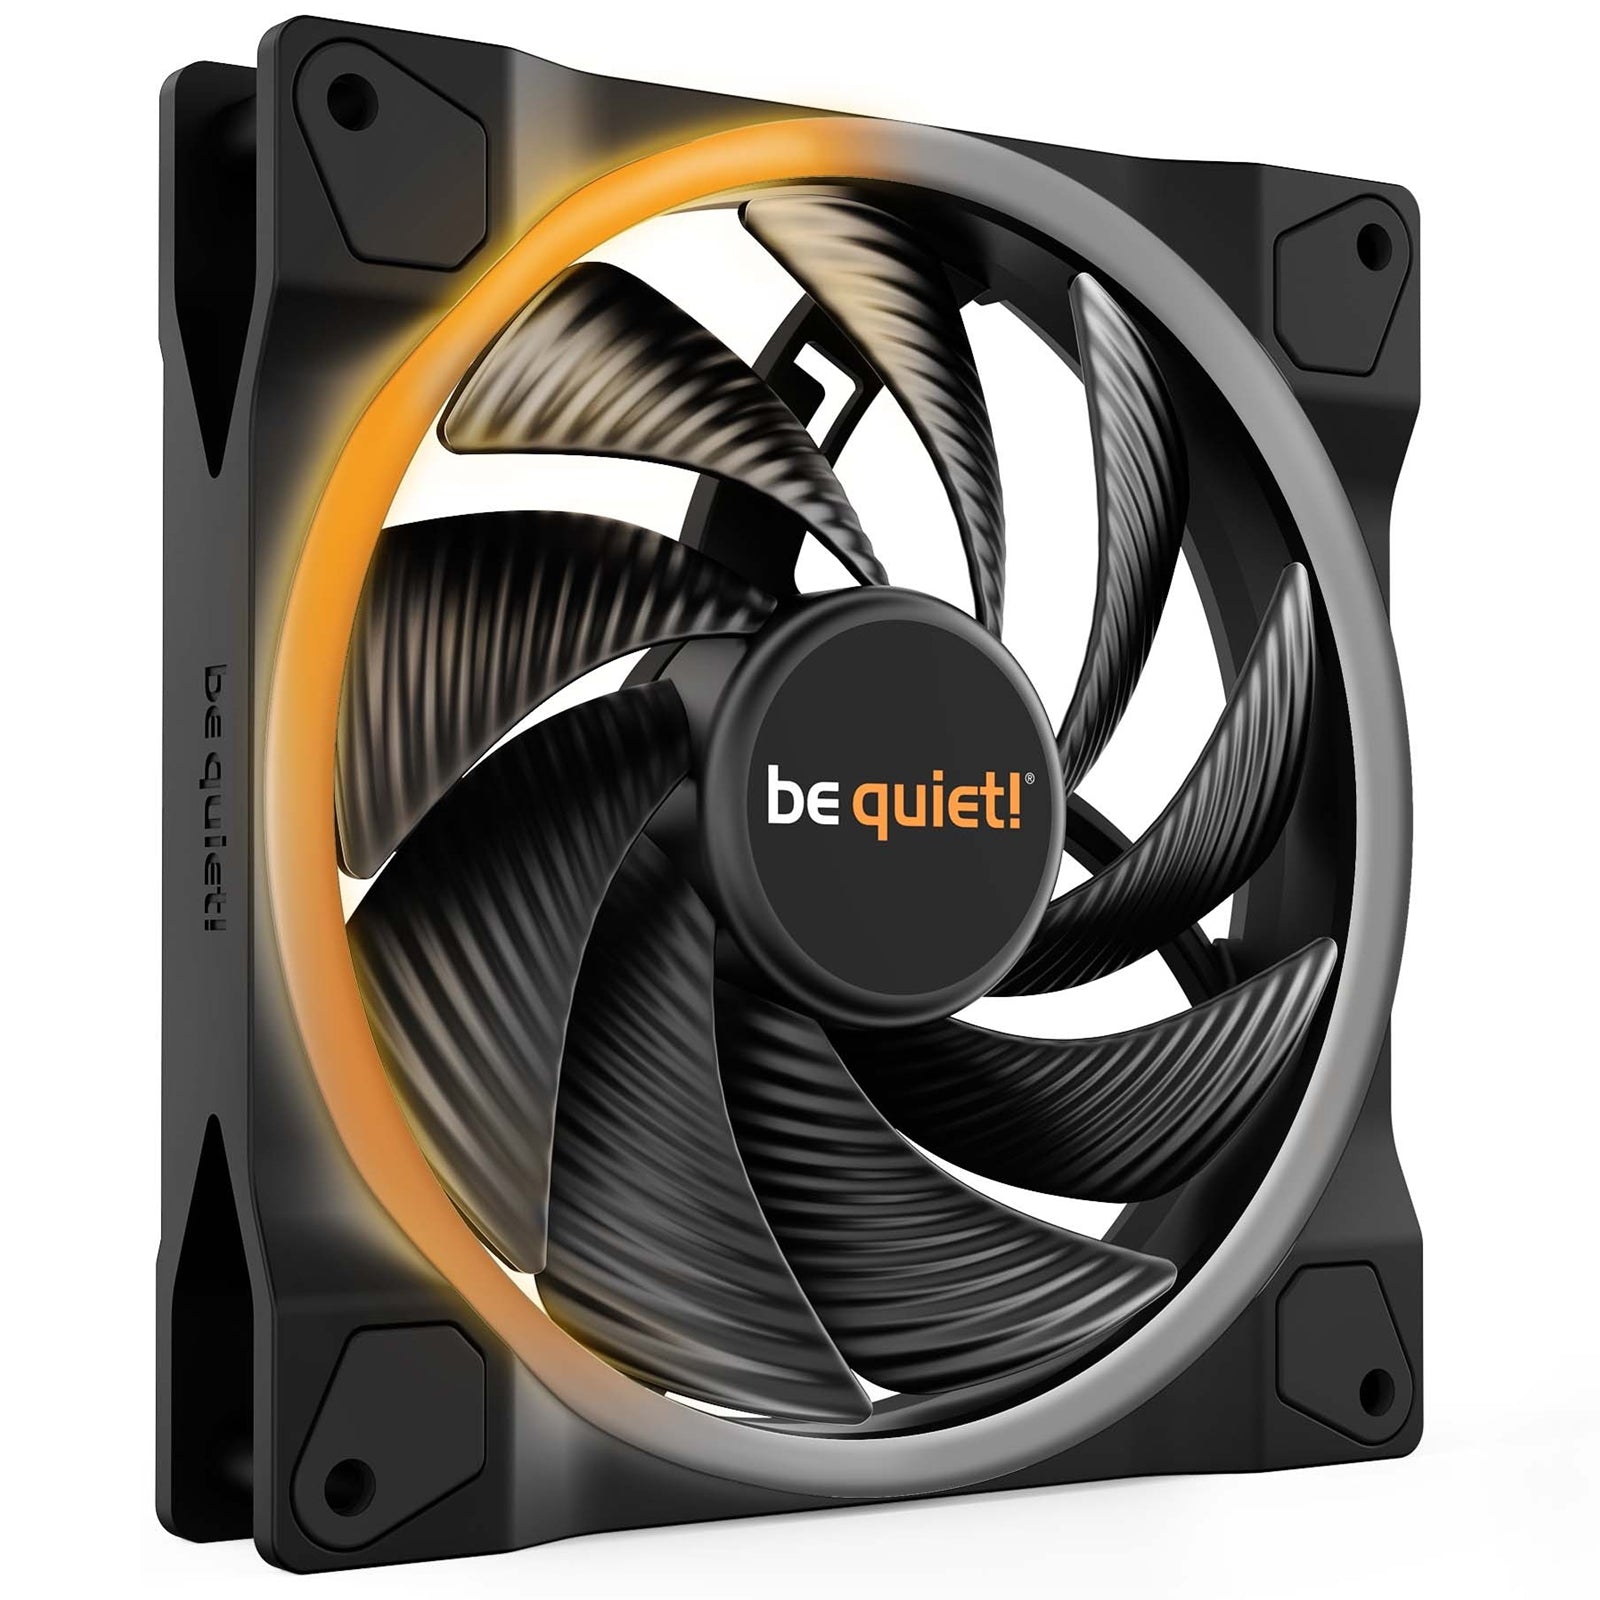 be quiet! Light Wings 140mm PWM High-Speed RGB Fan